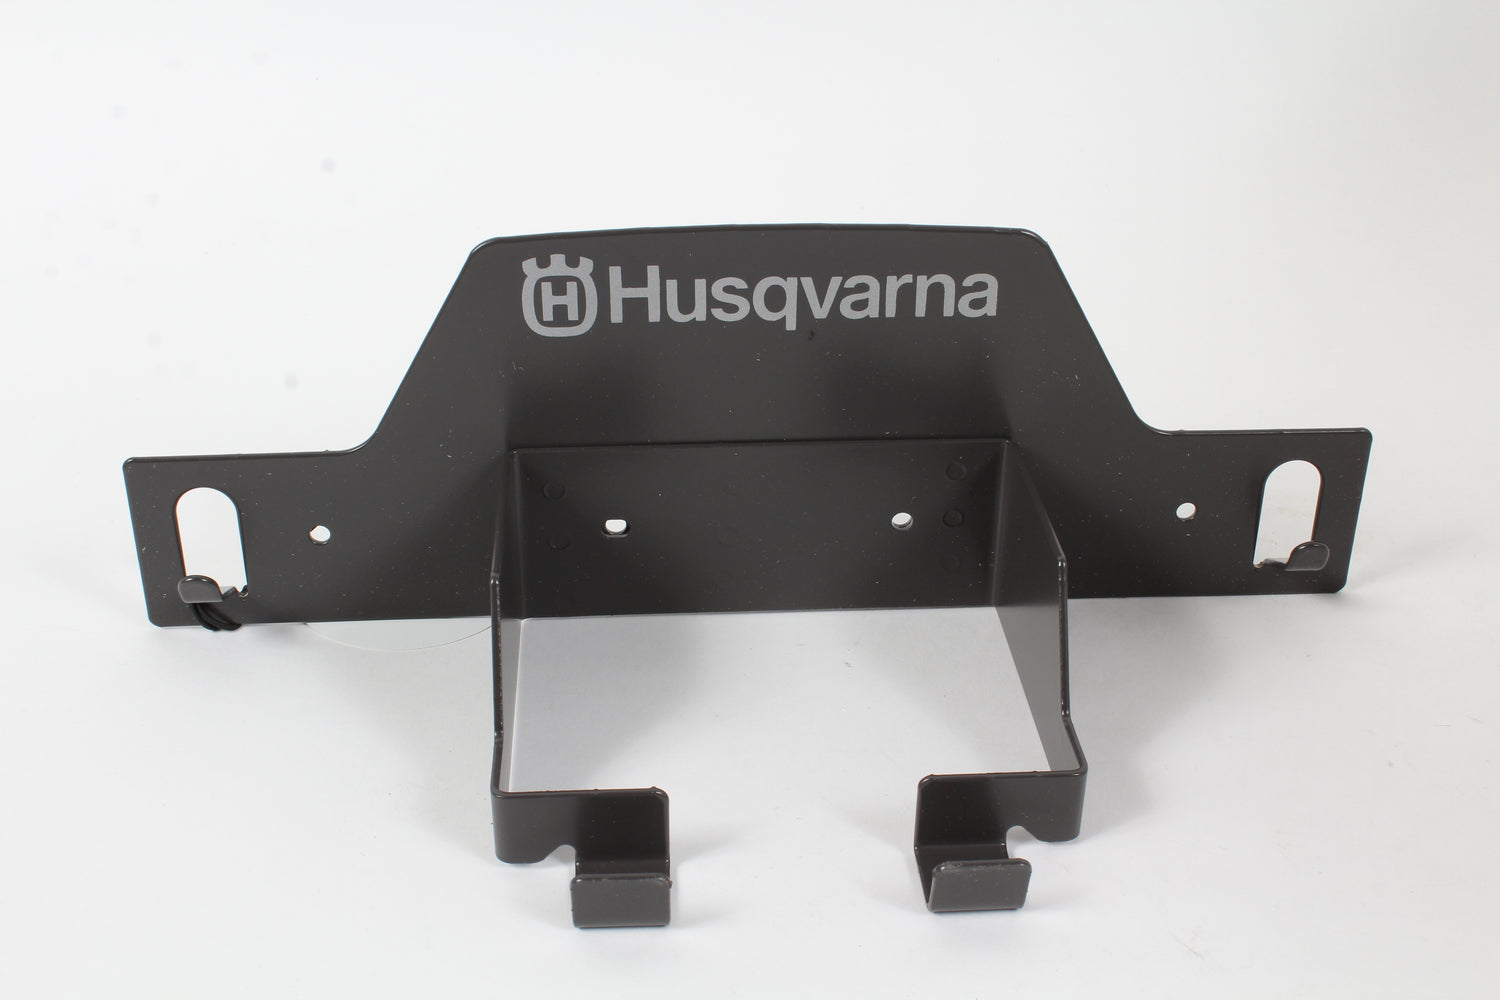 Genuine Husqvarna 585019702 Automower Wall Hanger For 400 & 500 Series